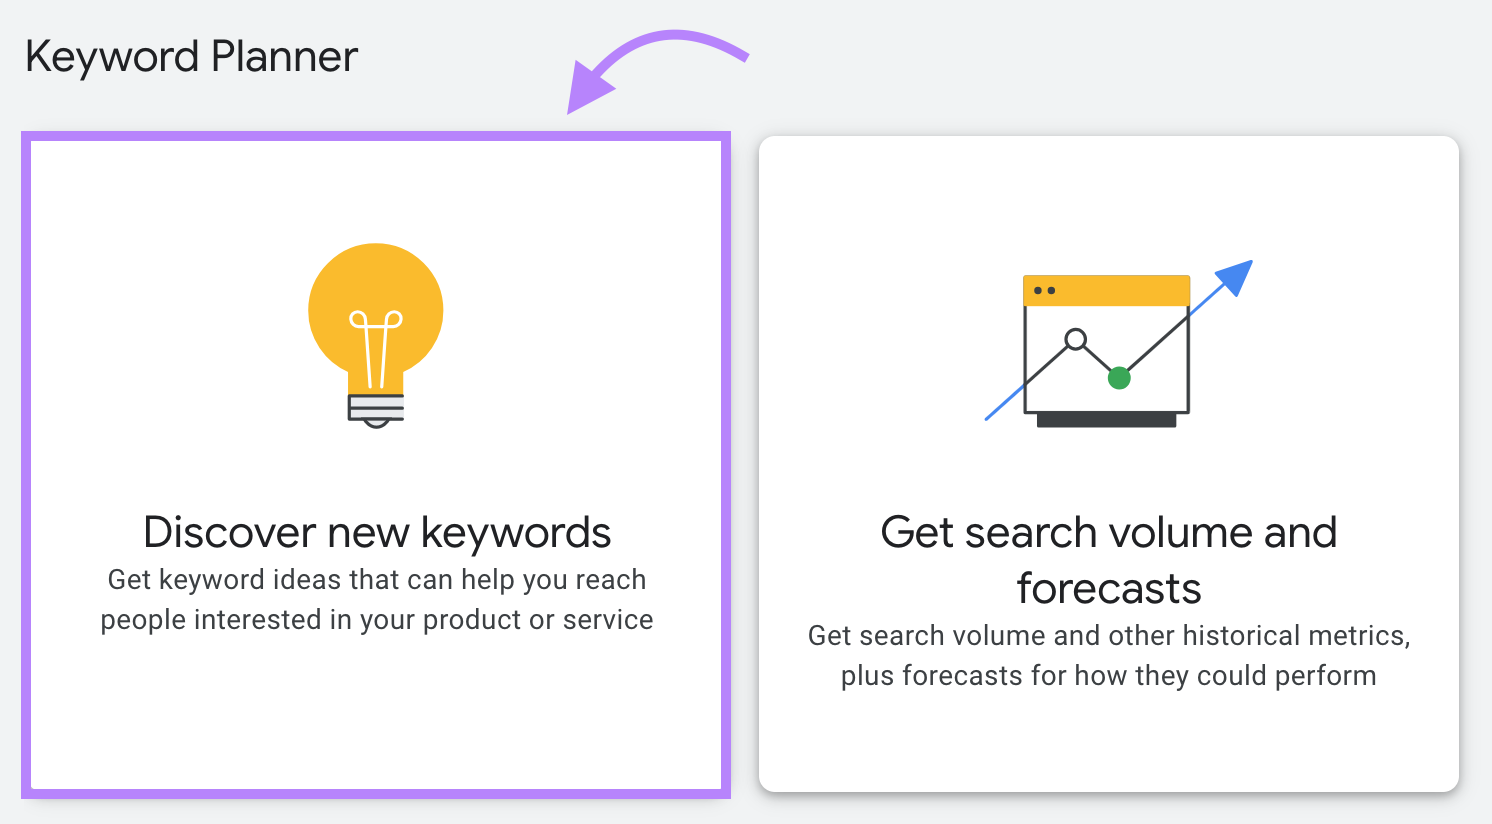 "Discover new keywords" option selected under Keyword Planner